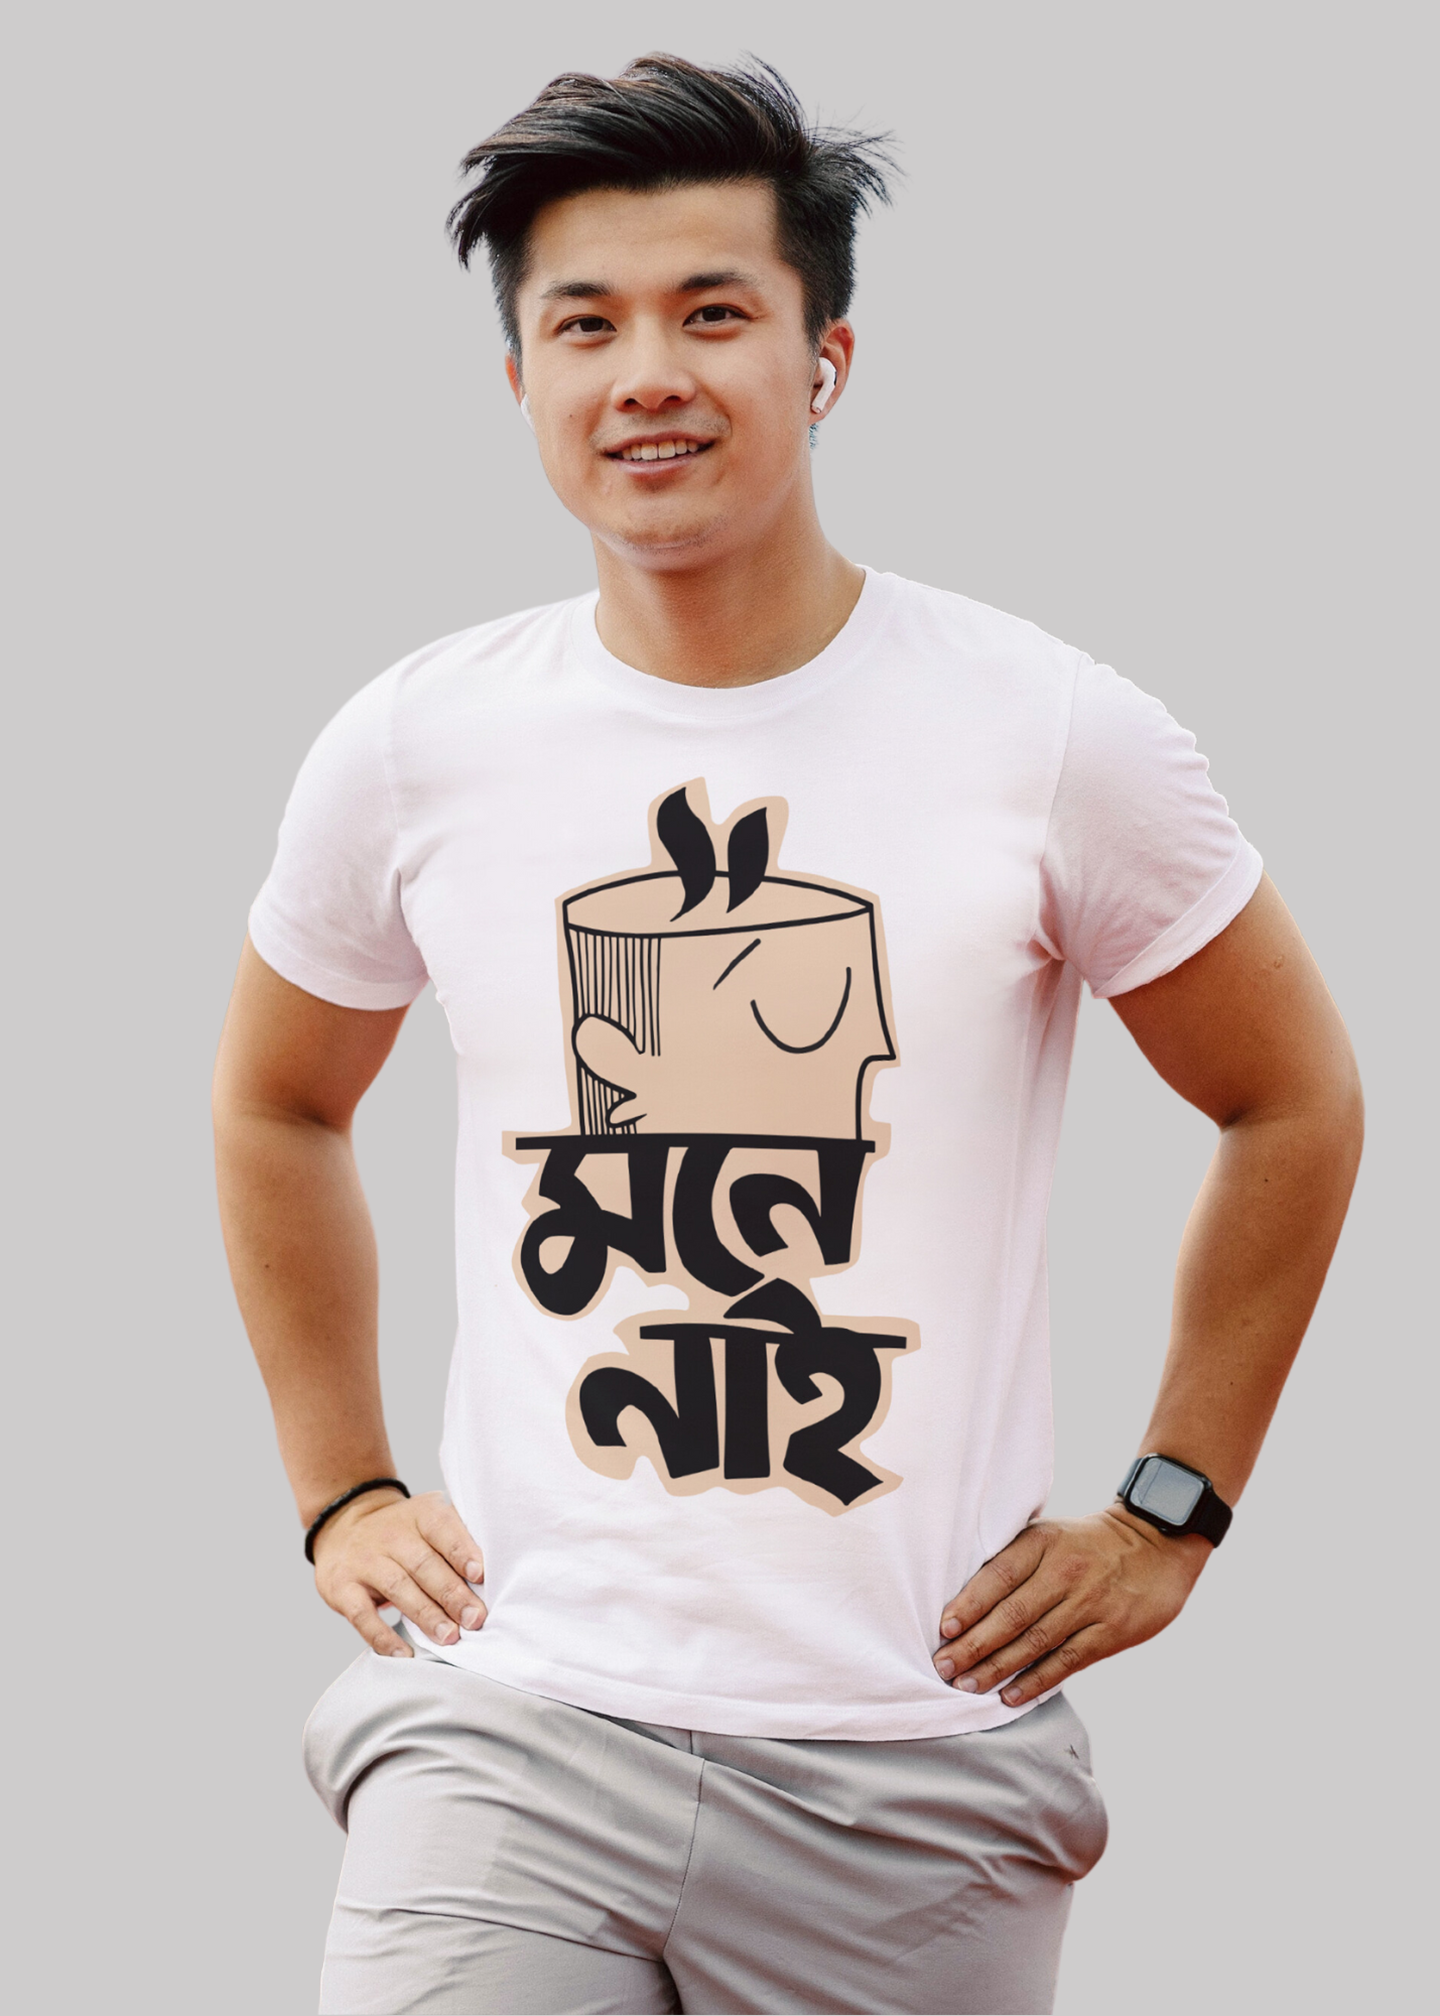 Mone nei bengali caligraphy Printed Half Sleeve Premium Cotton T-shirt For Men